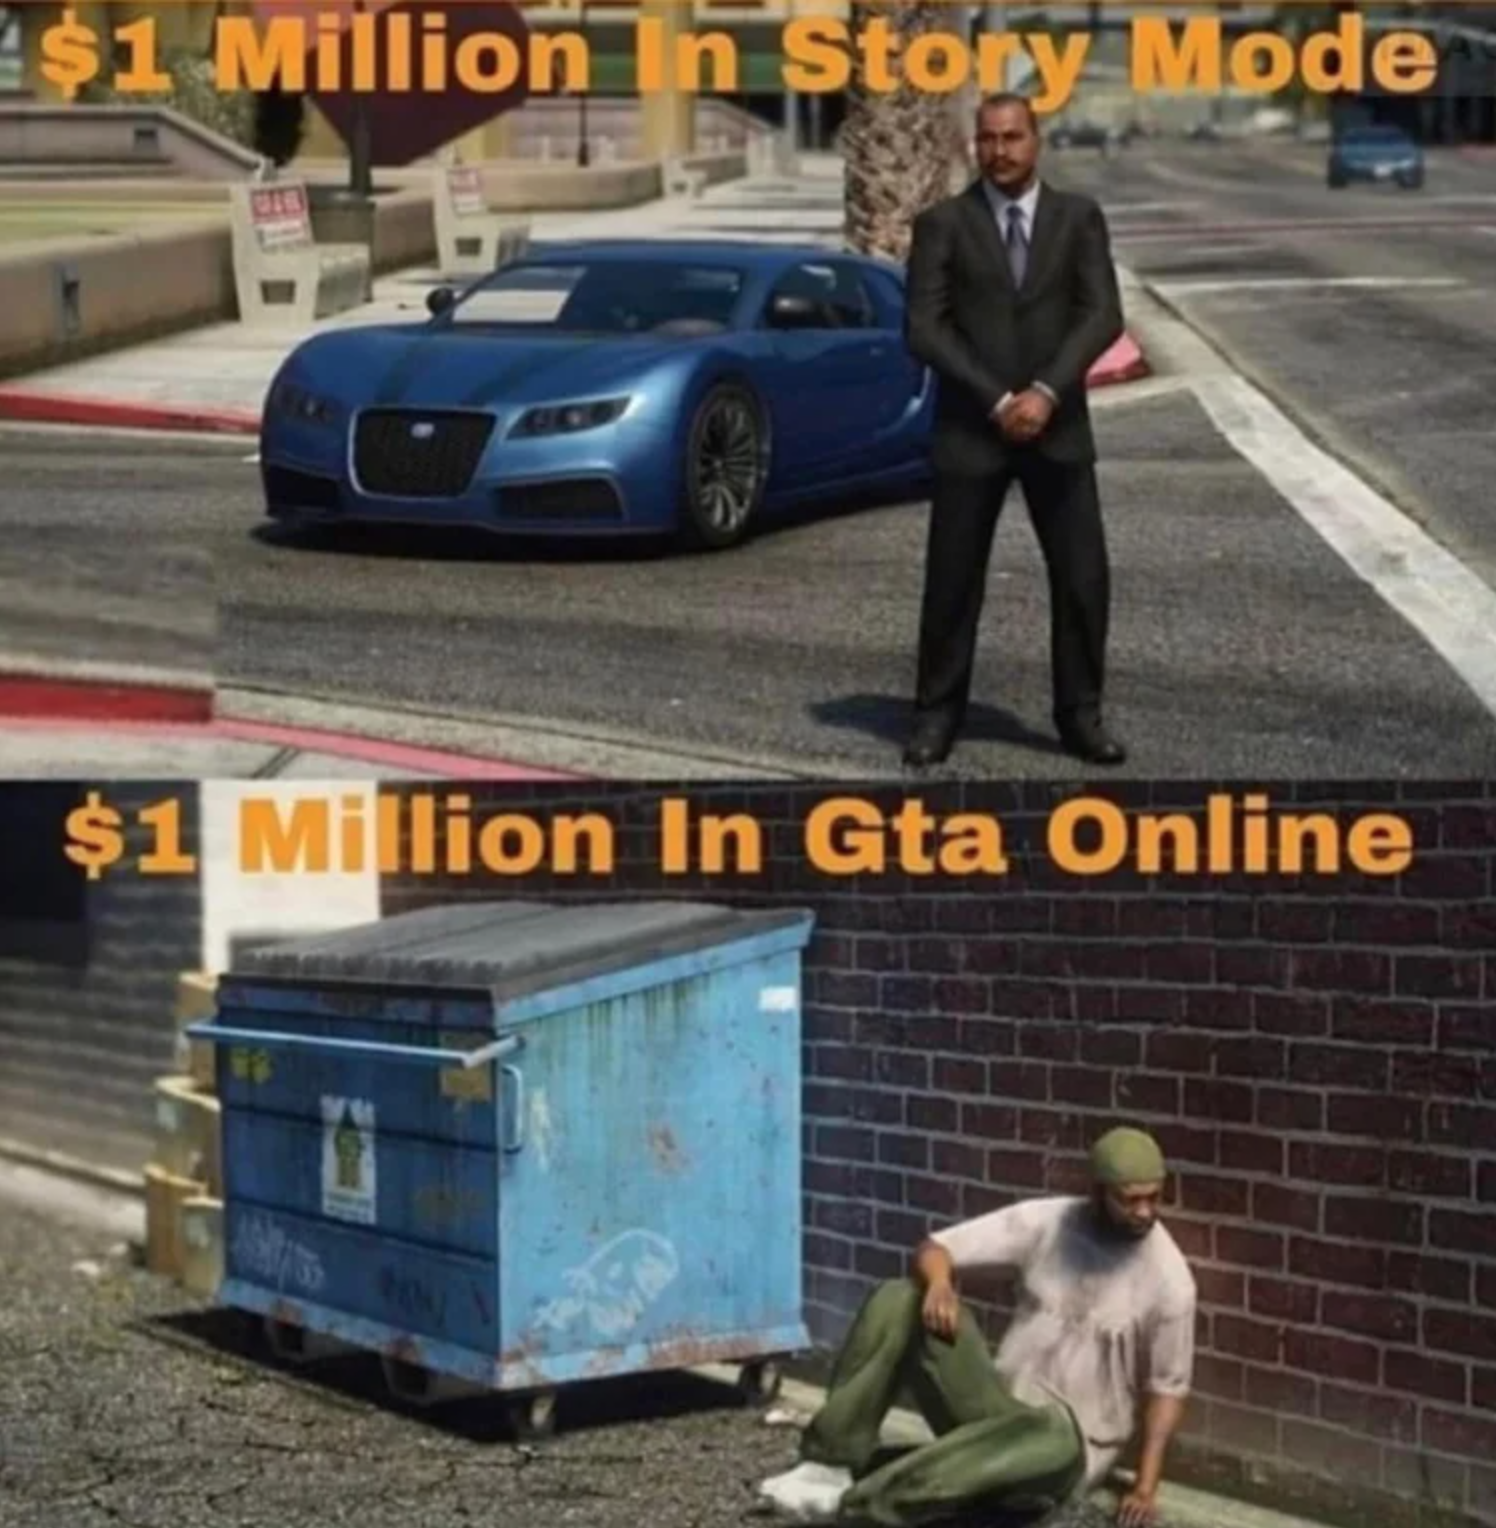 funny gaming memes - vehicle door - $1 Million In Story Mode $1 Million In Gta Online